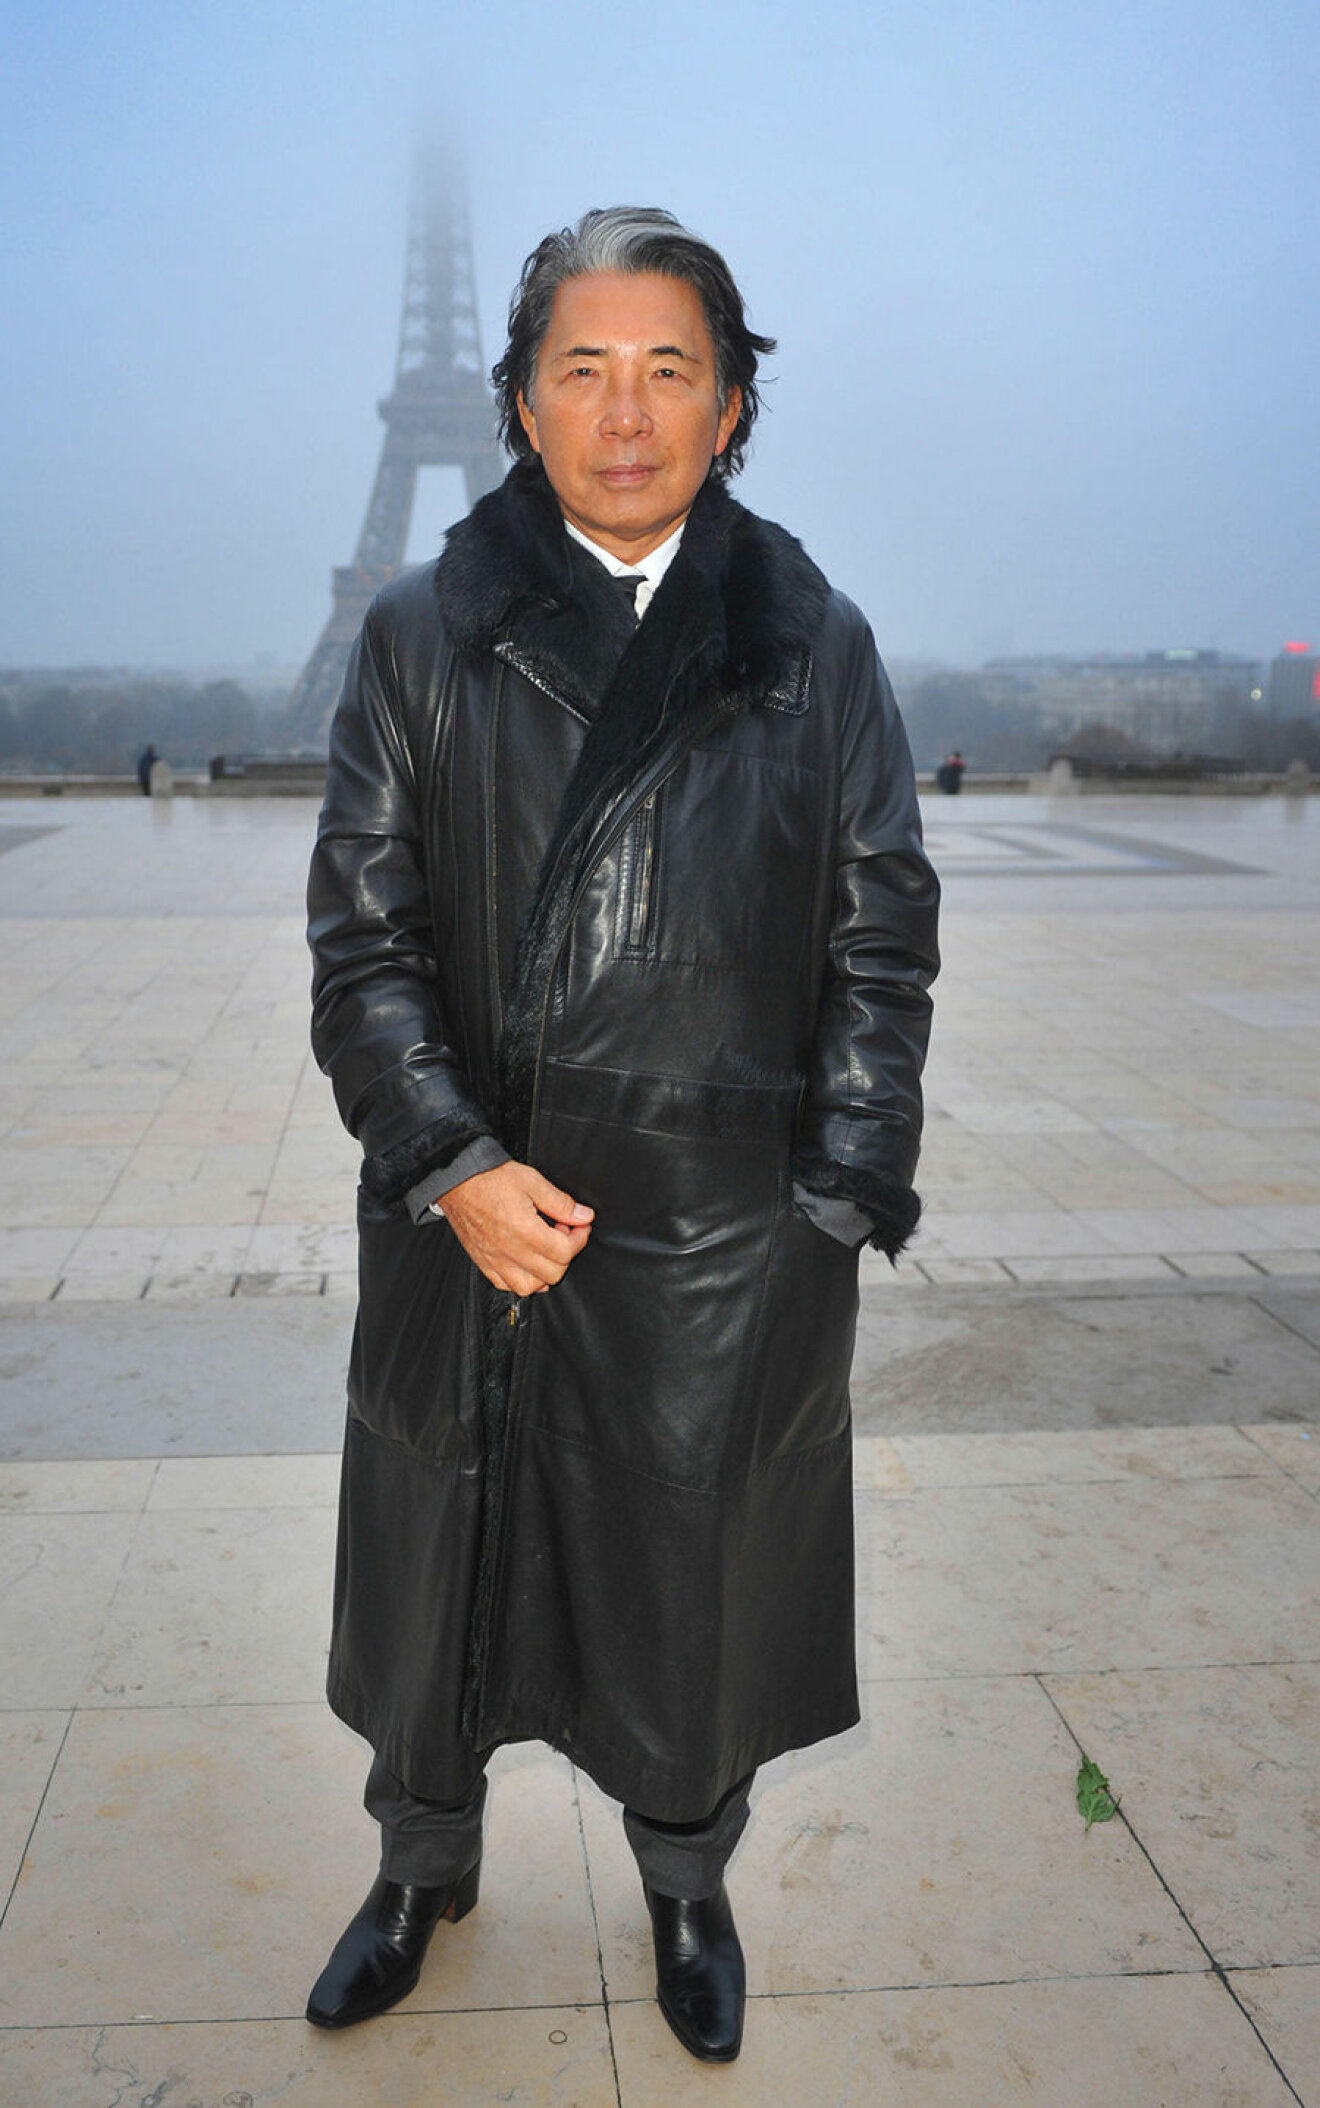 EMGCT6 11.MARCH.2012. PARIS FASHION DESIGNER KENZO TAKADA IN FRONT OF EIFFEL TOWER IN PARIS, FRANCE